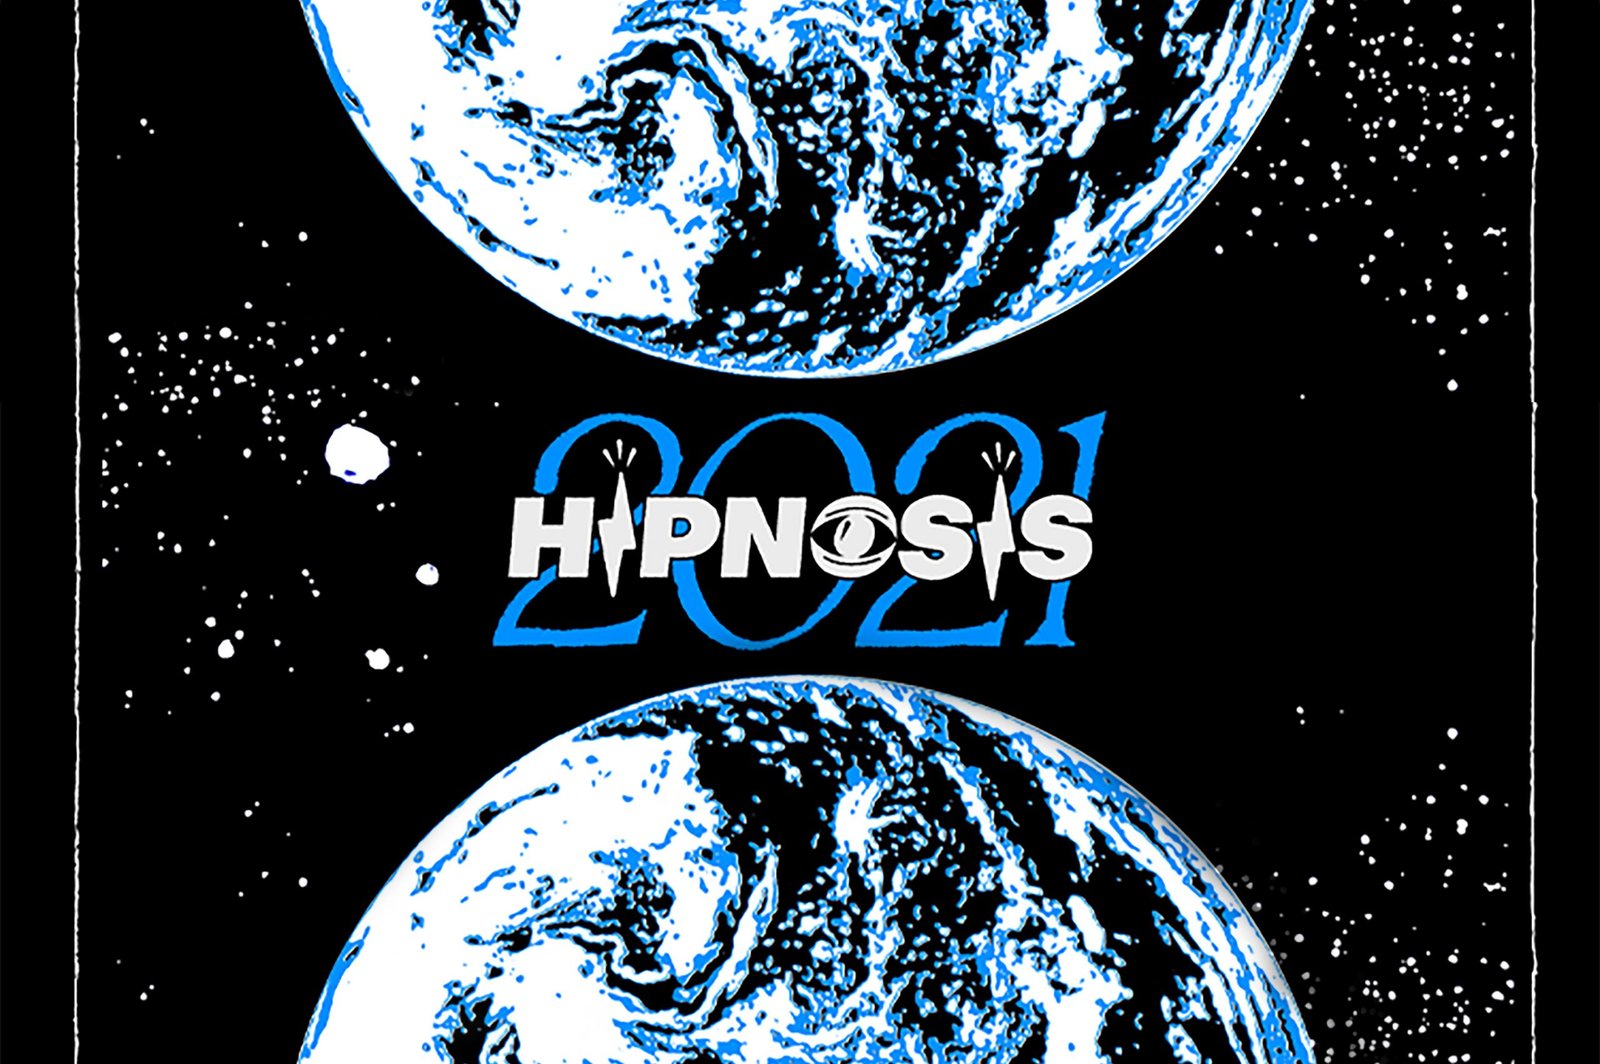 Hipnosis 2021 scaled